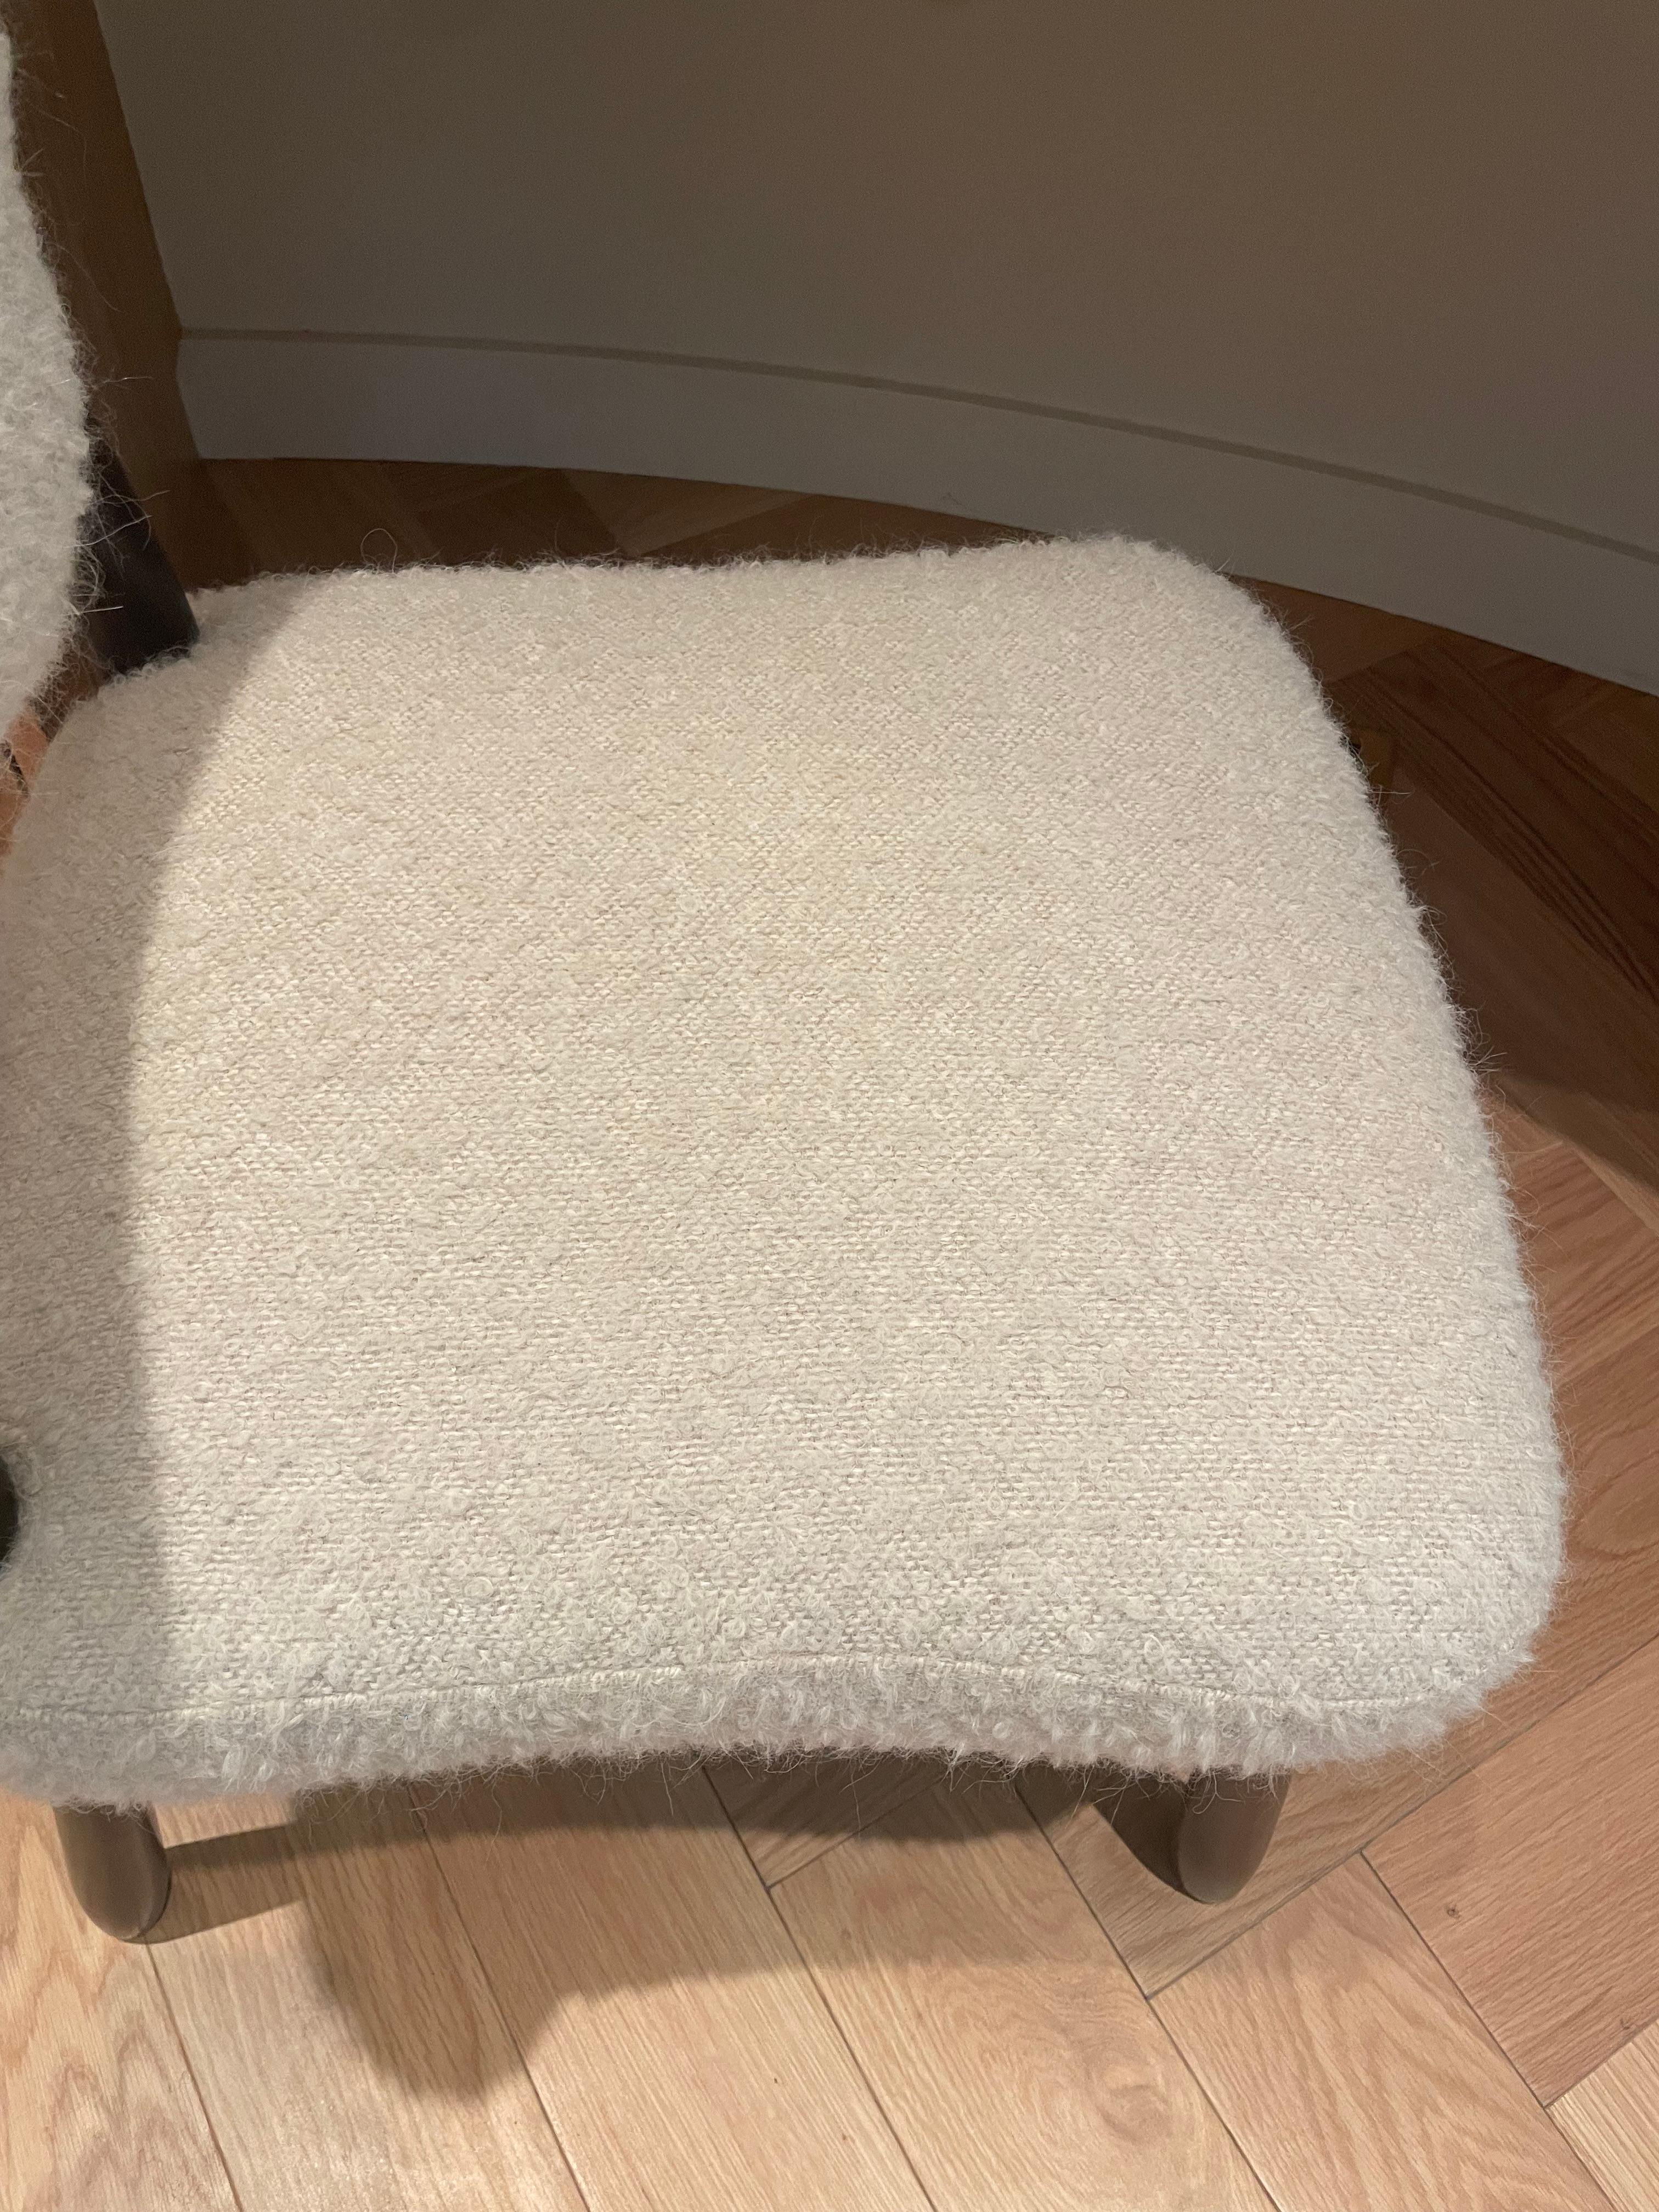 Organic Modern Studio OSKLO 'Flower' Chair in cozy White Boucle  For Sale